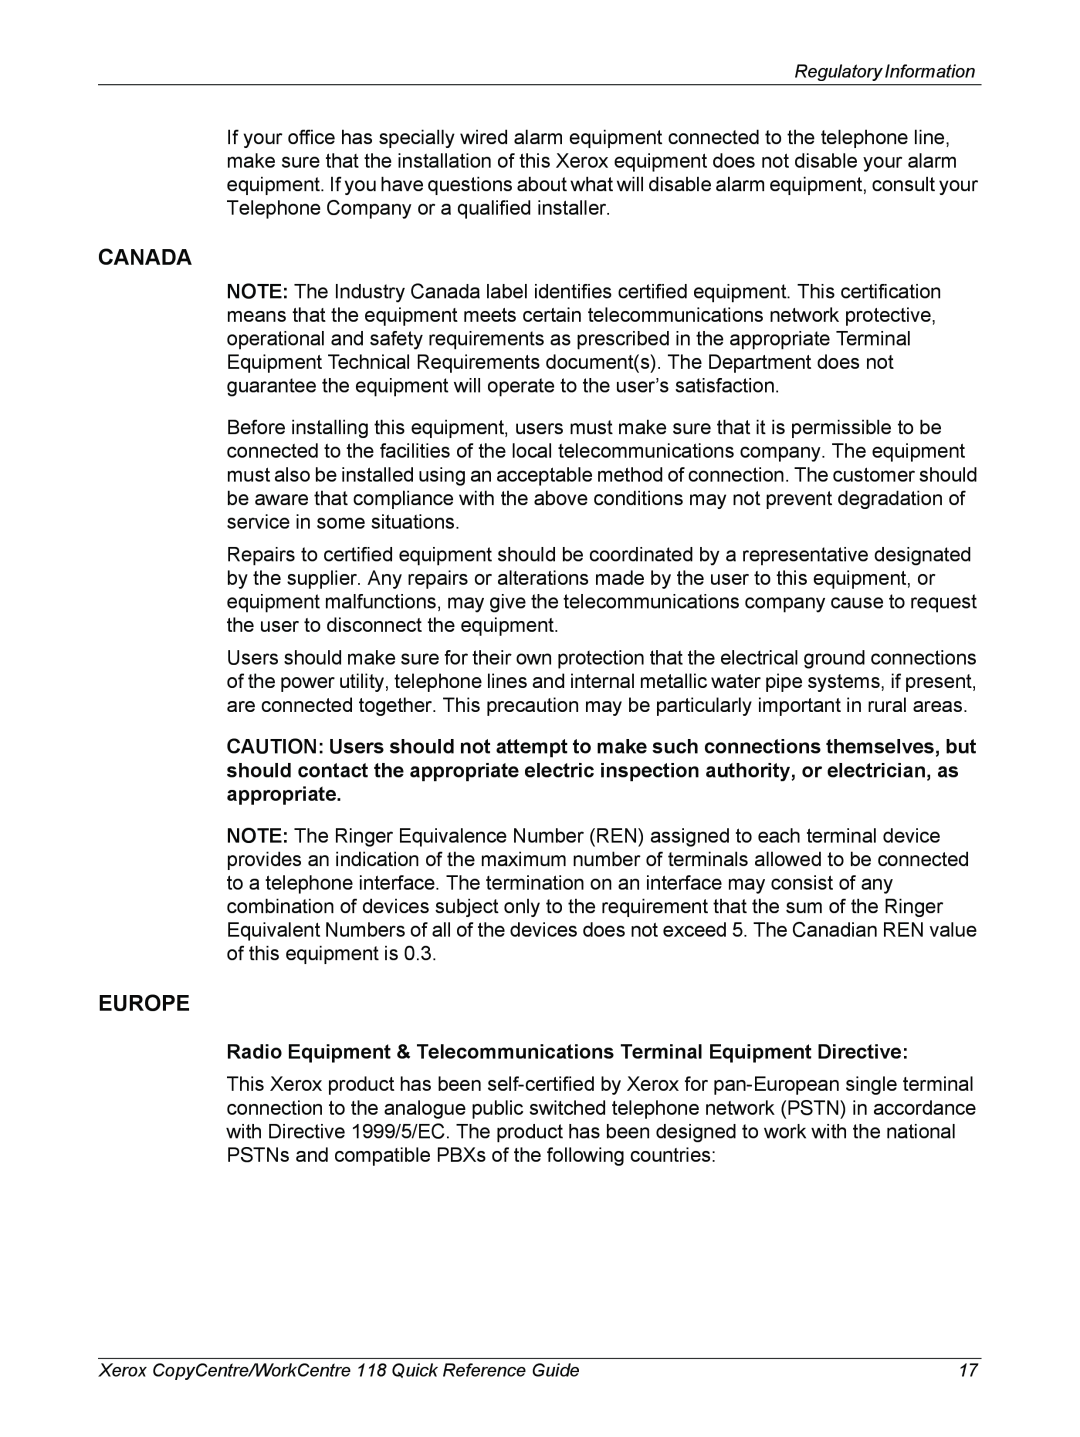 Xerox M118i, C118 manual Canada, Europe, Radio Equipment & Telecommunications Terminal Equipment Directive 